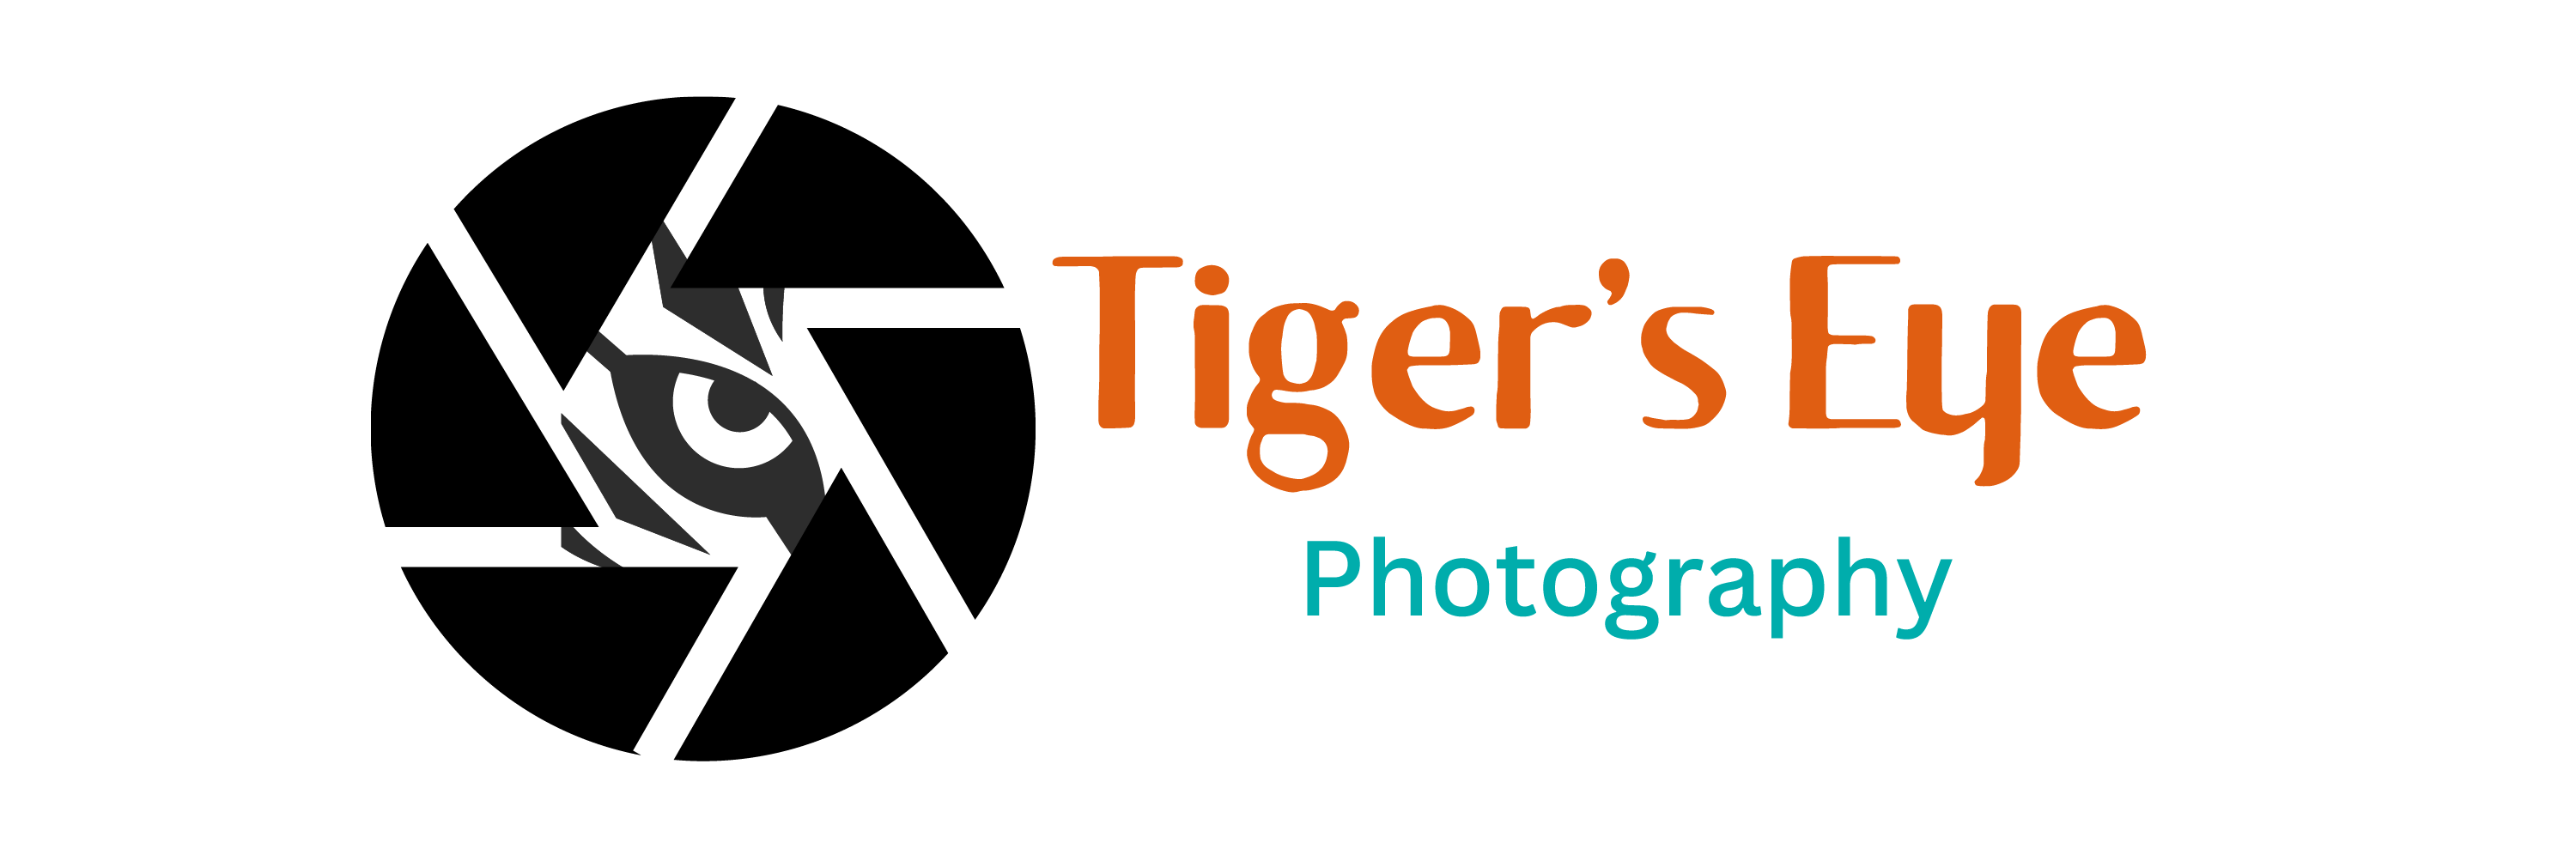 Tiger's Eye Photography